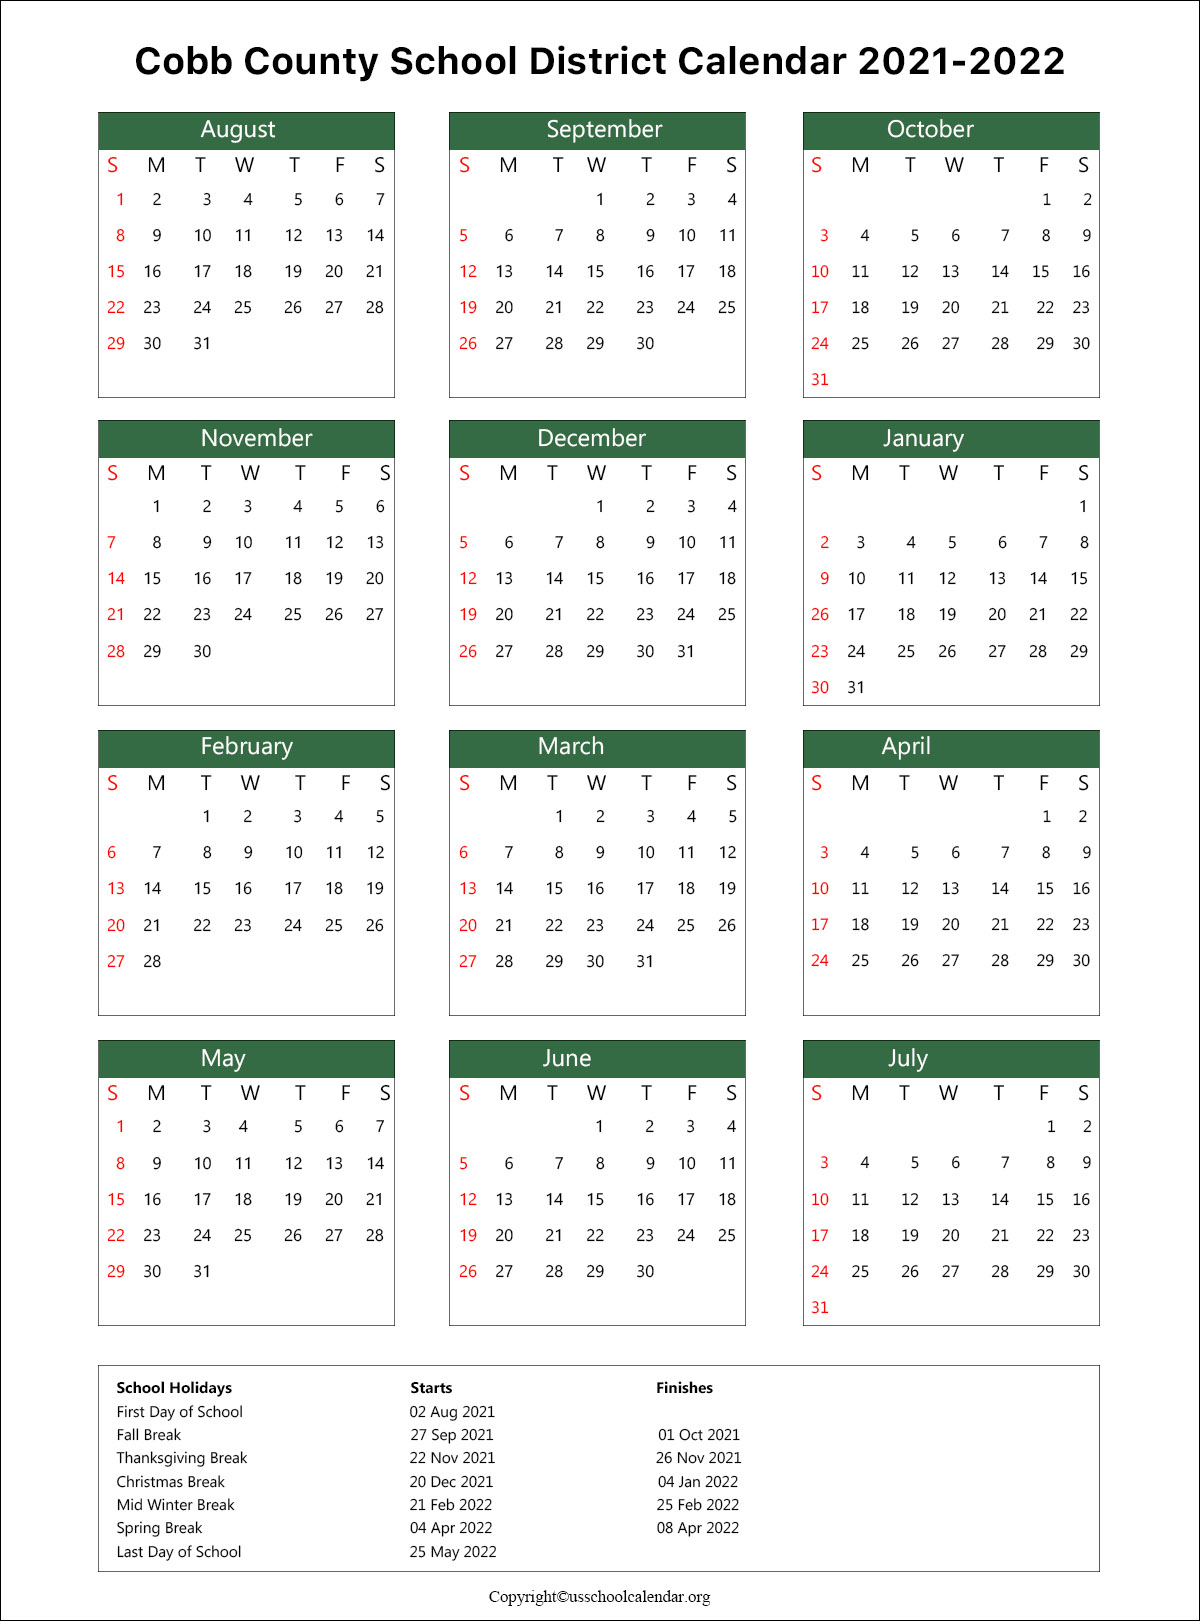 Cobb County School Calendar with Holidays 2021-2022